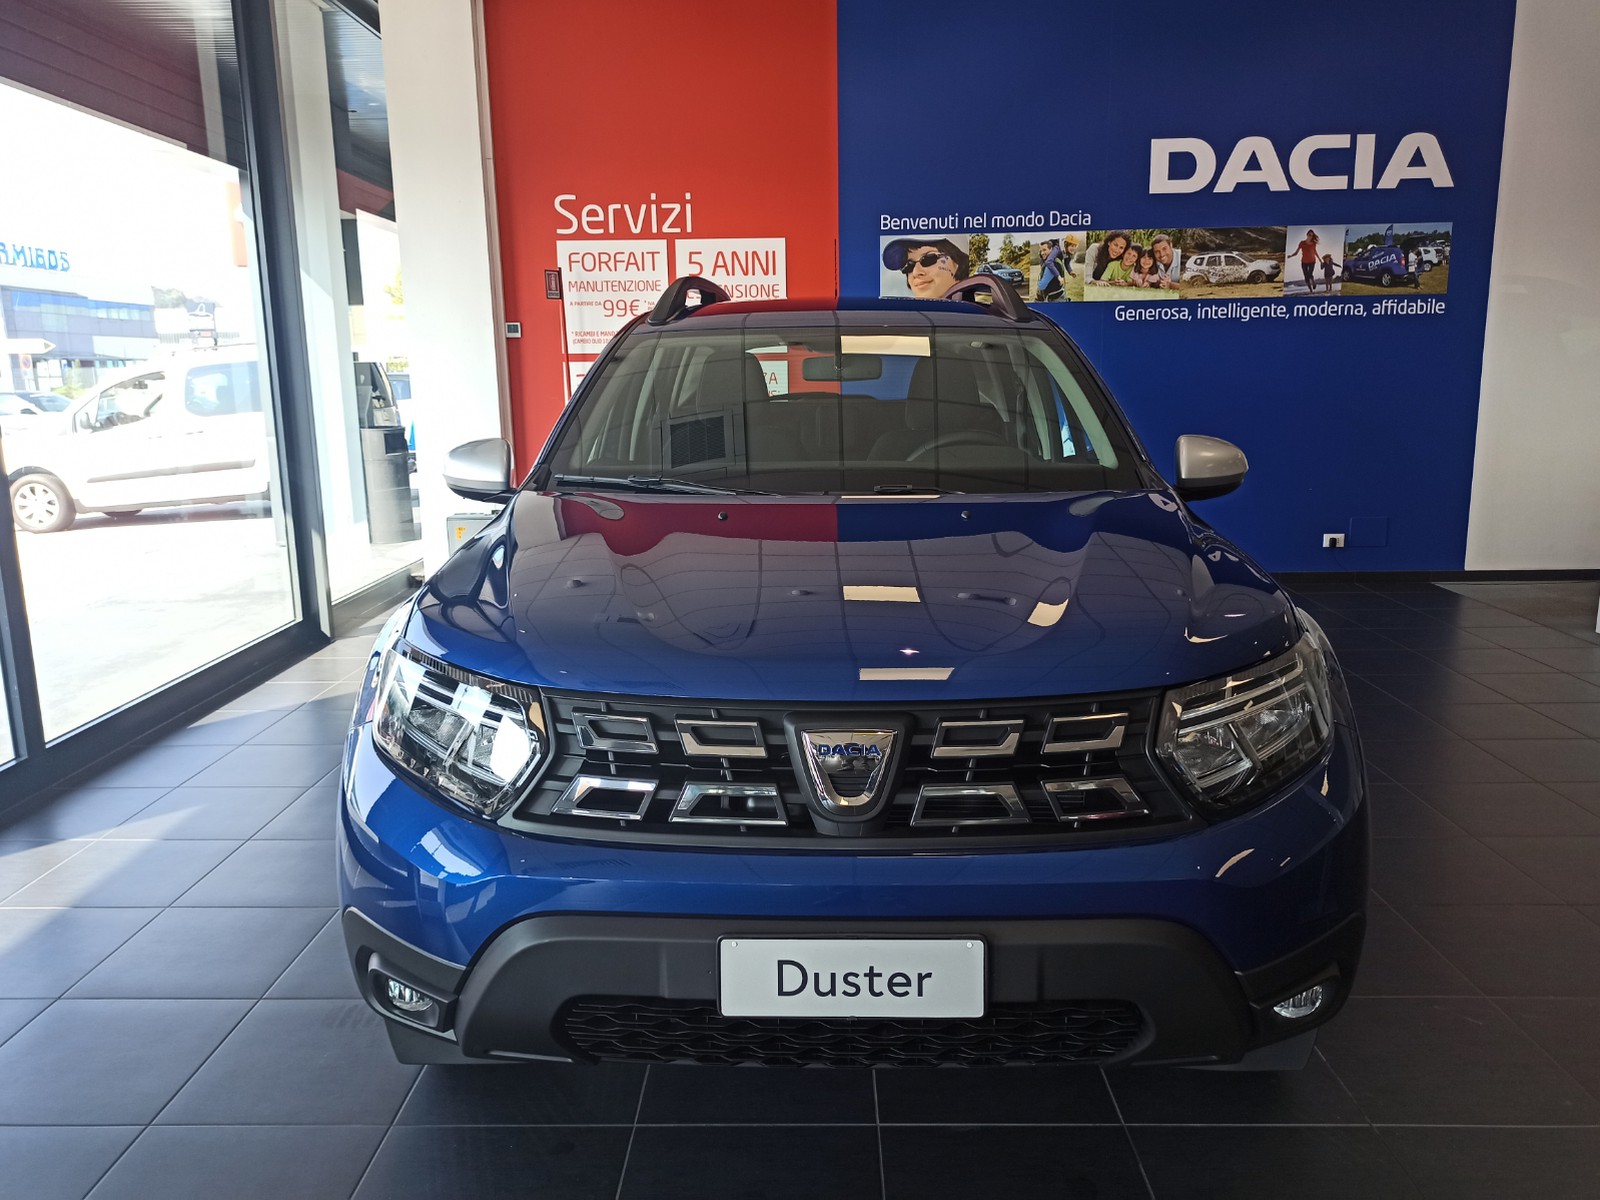 AUTONORD Dacia Duster